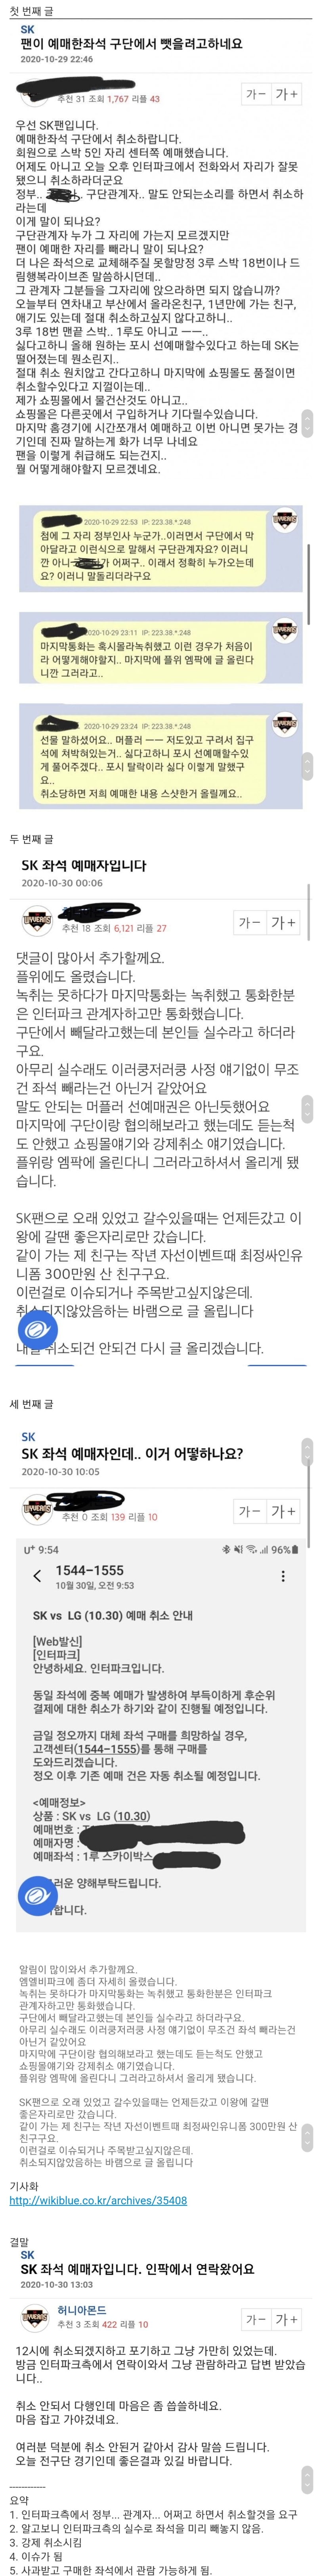 Screenshot_20201030-141112_Samsung Internet.jpg